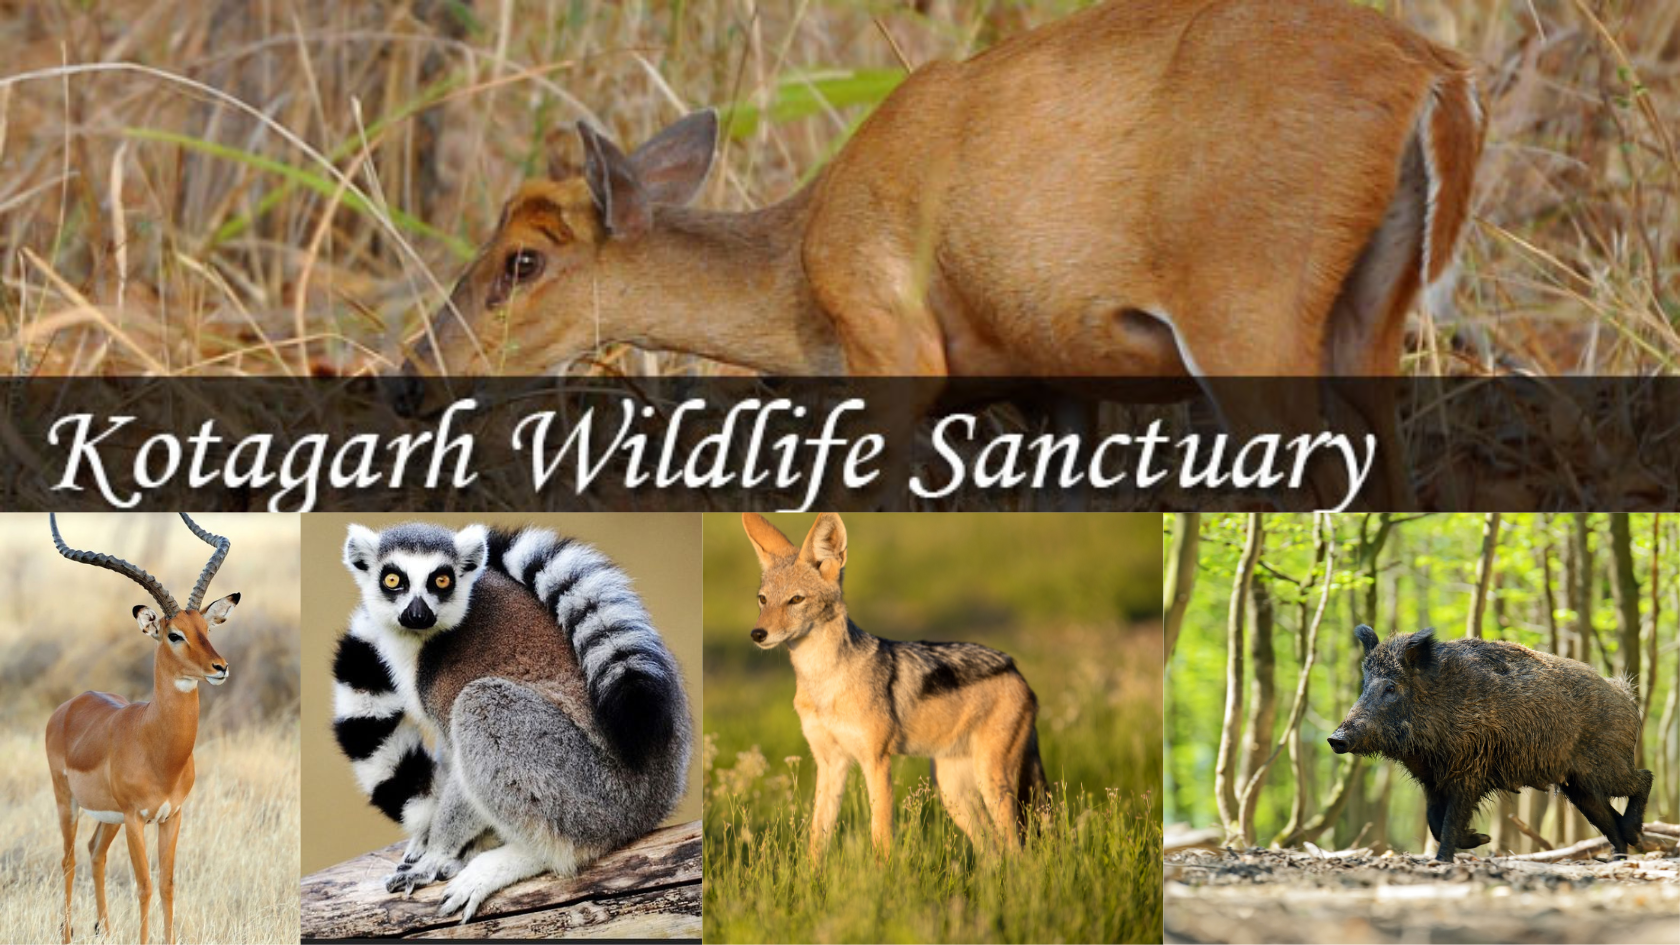  Kotagarh Wildlife Sanctuary